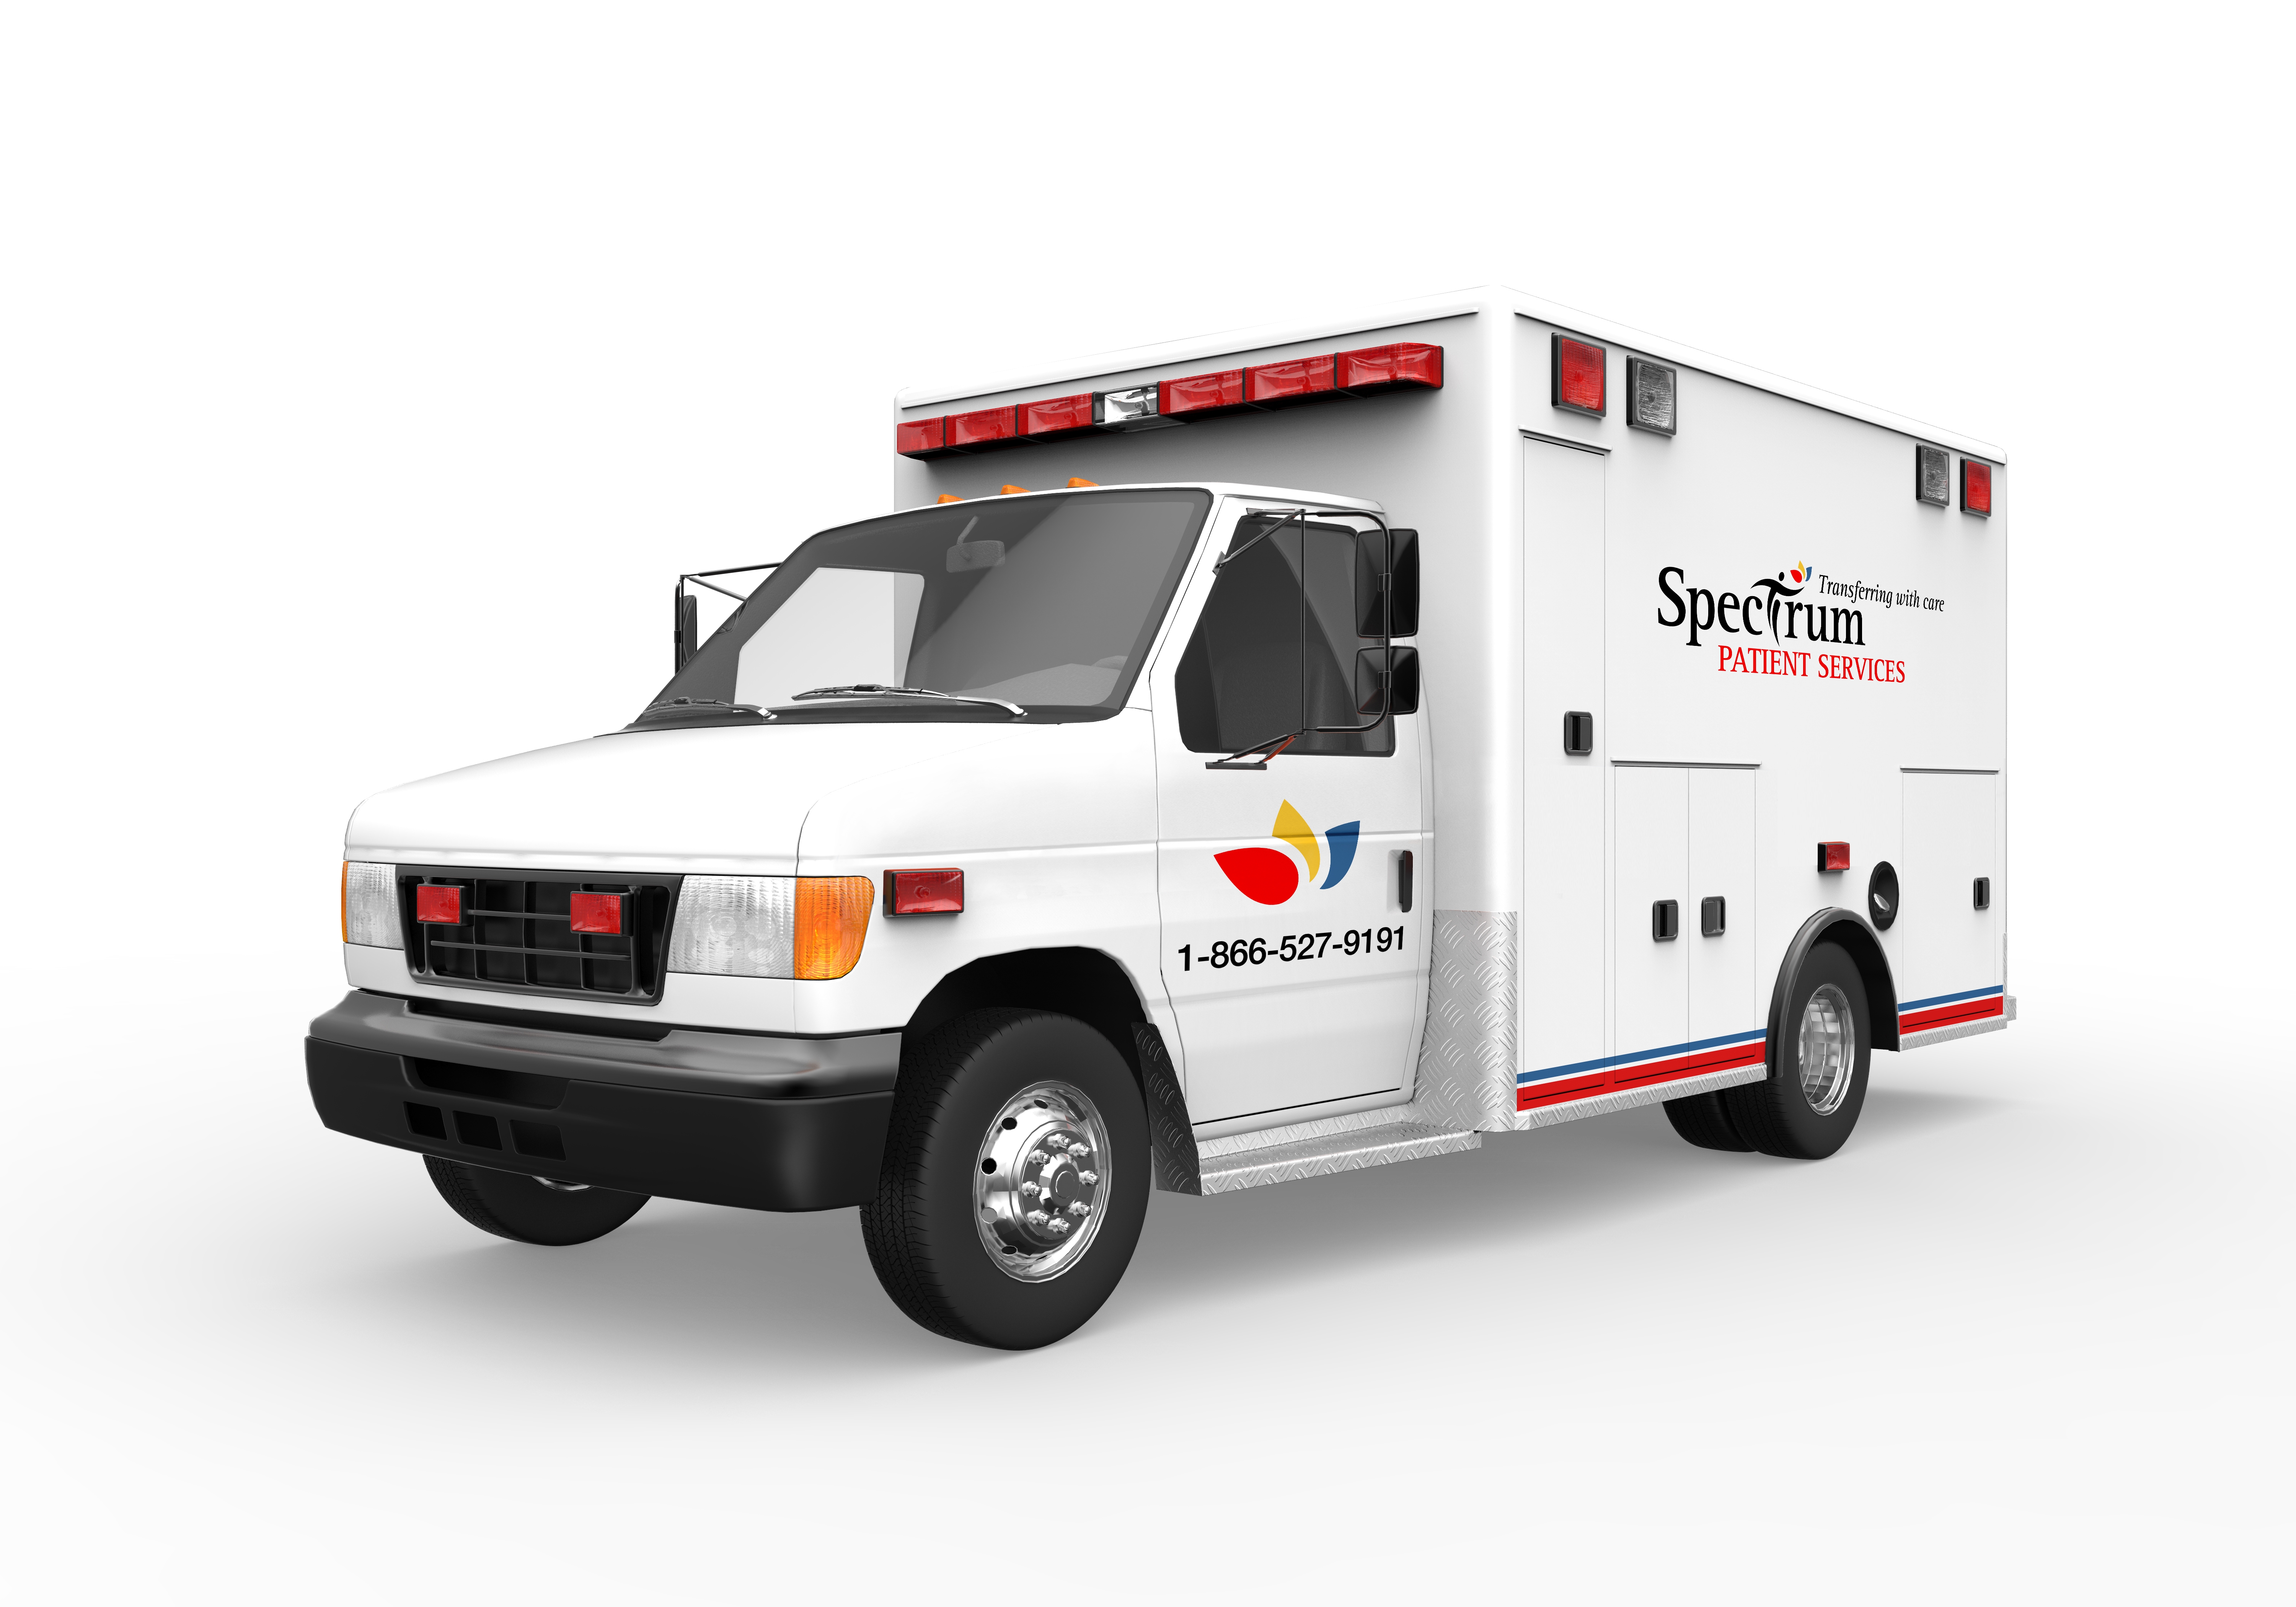 Image: Media Release: Spectrum Health Care acquires Event Medical Staffing Inc.